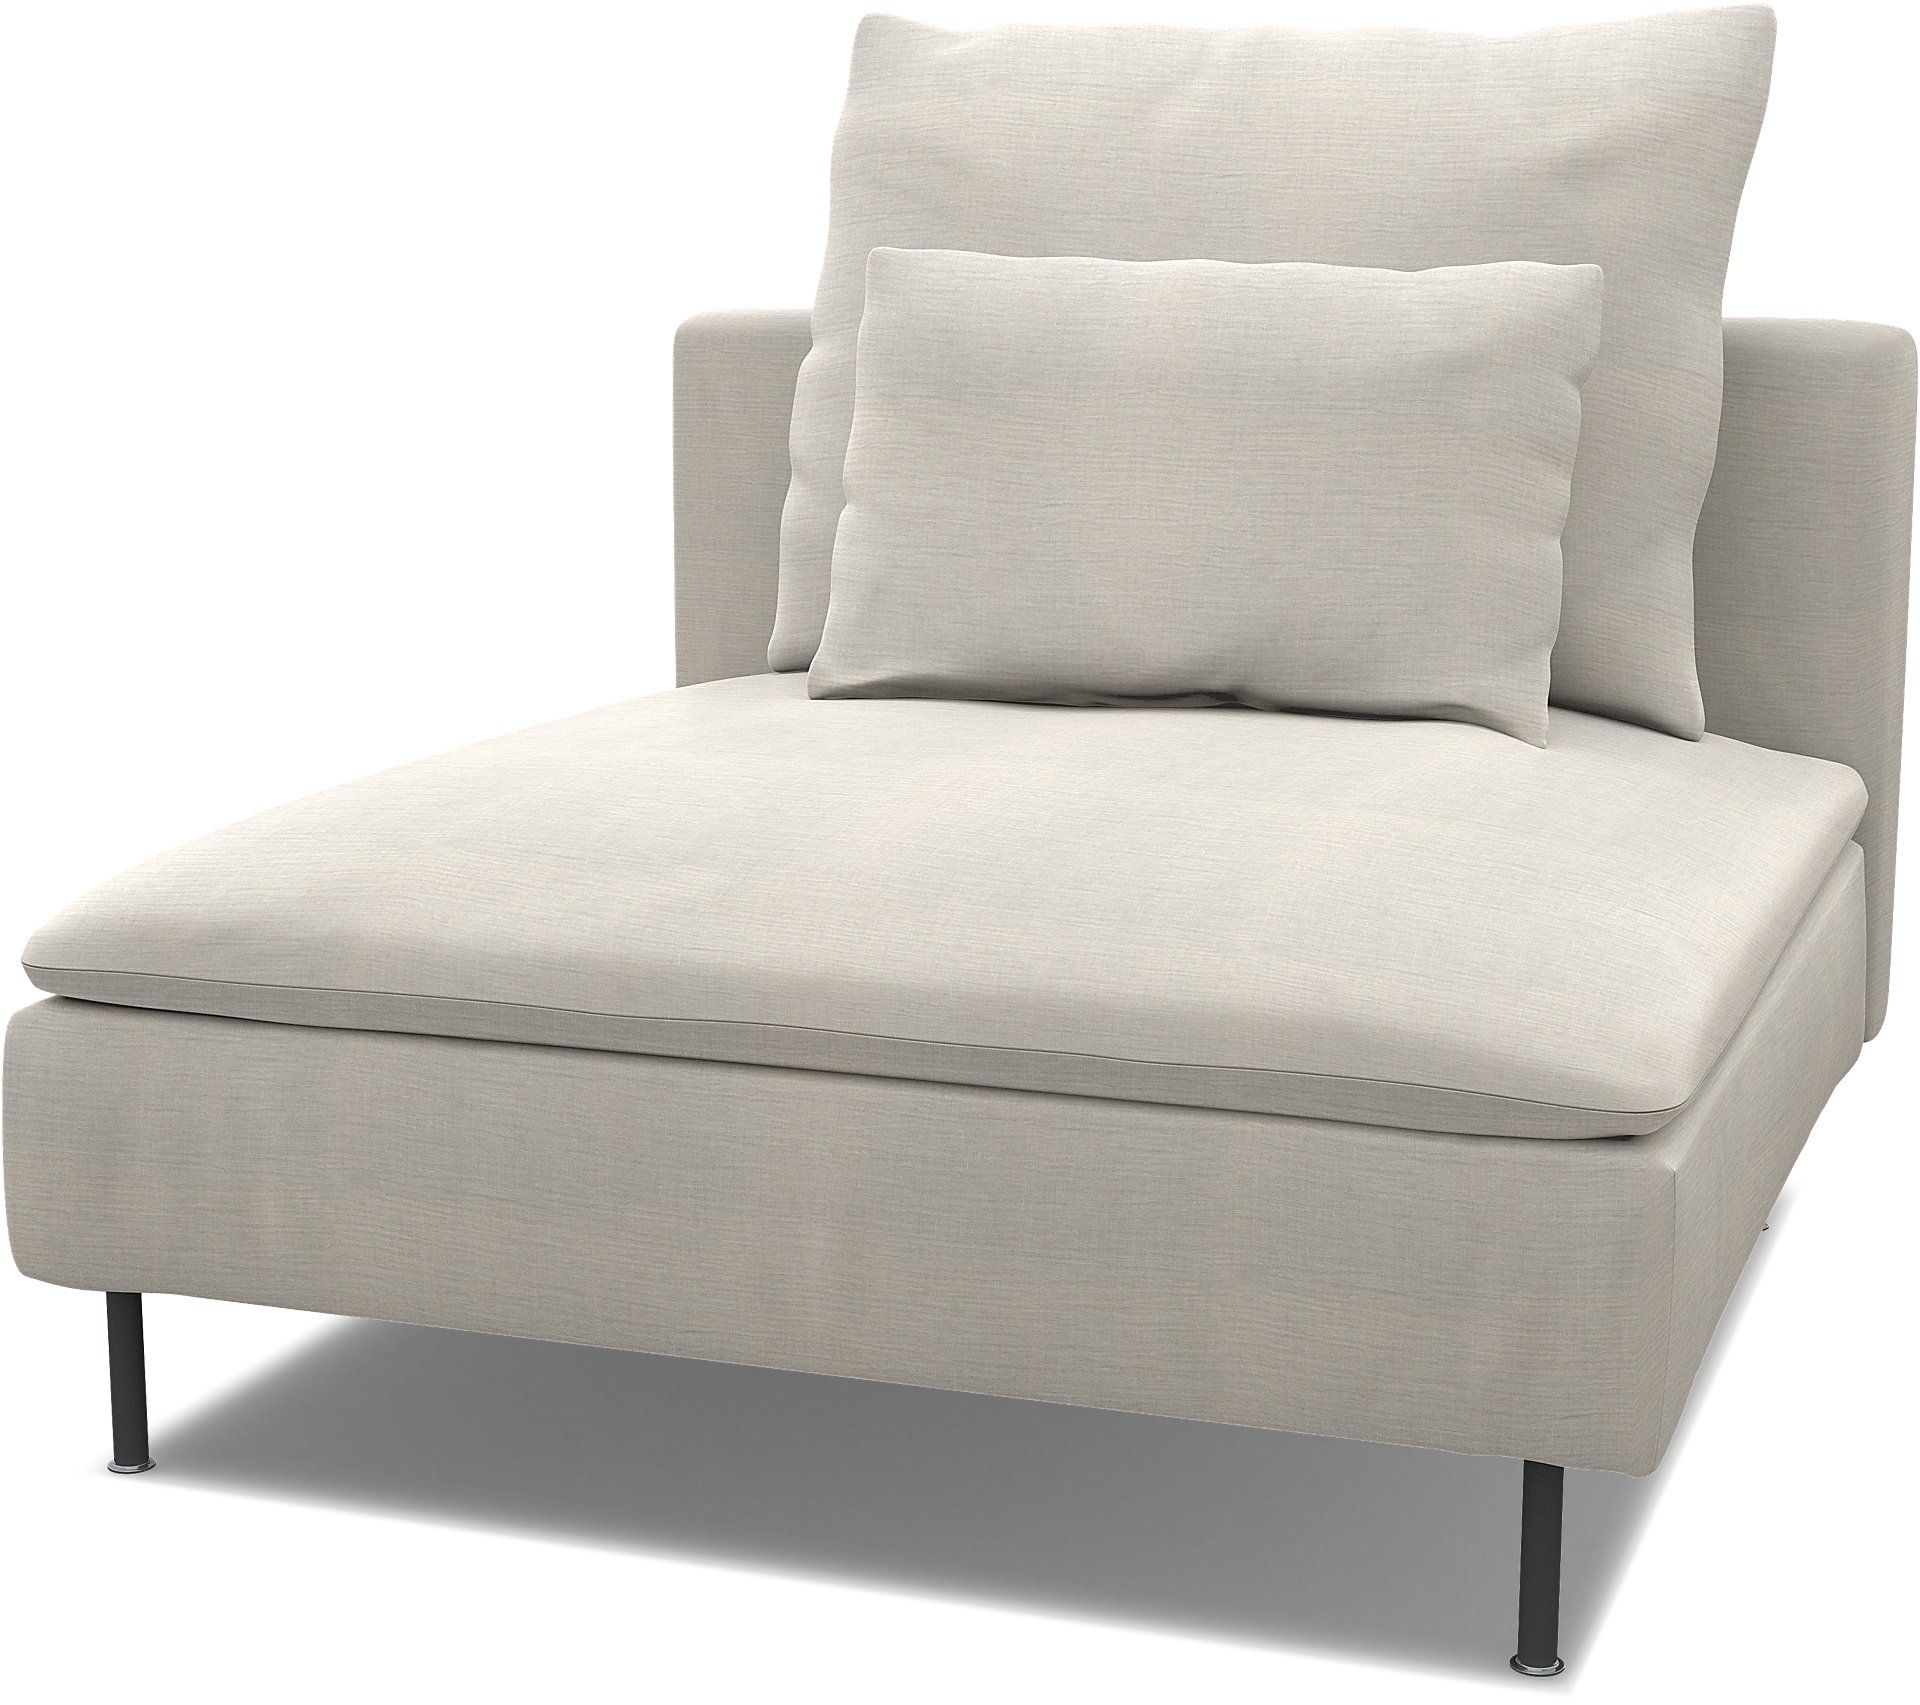 Spare back cushion cover for SODERHAMN 1 SEAT SECTION, Soft White, Linen - Bemz